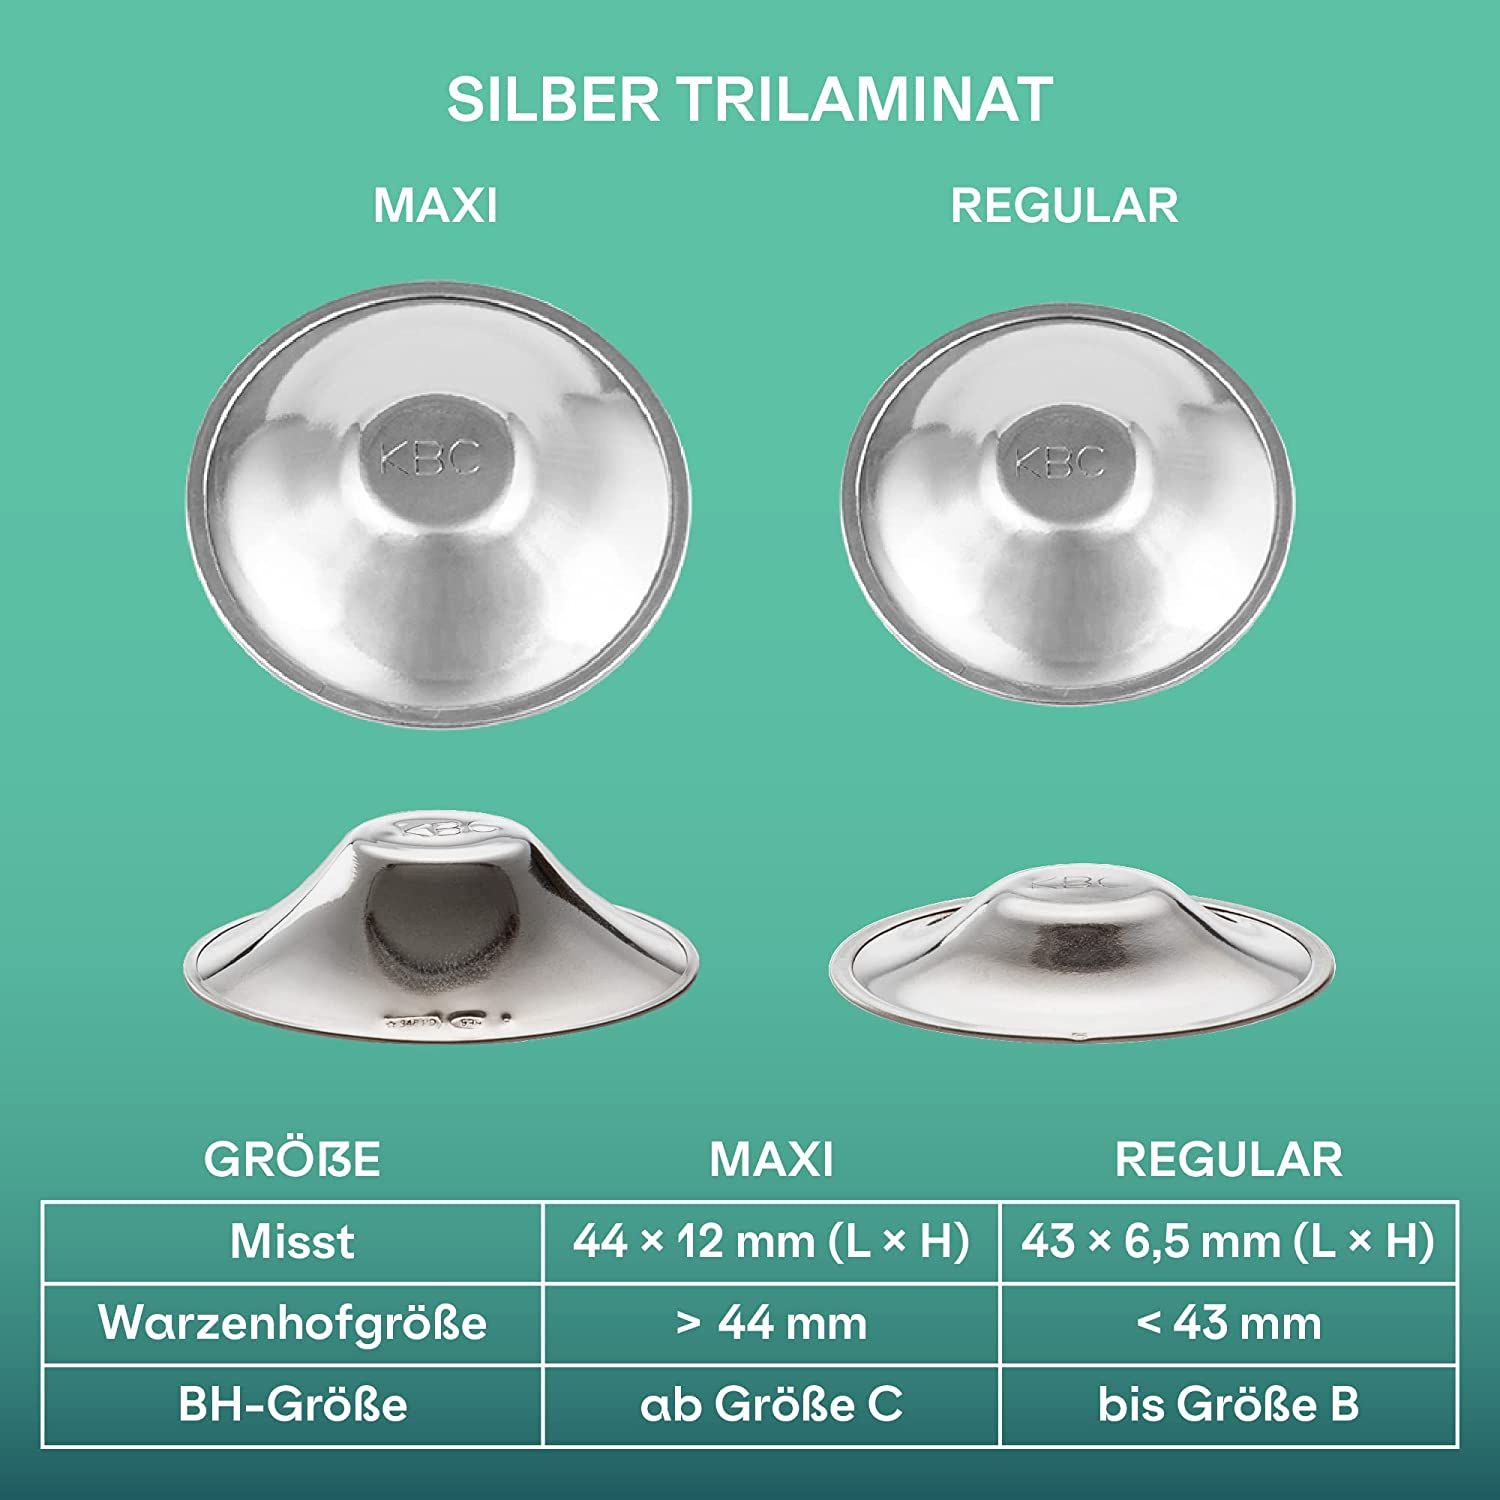 Koala Babycare Silberhütchen - Standardgröße Silber Trilaminat für maximale Resistenz - Brustwarze